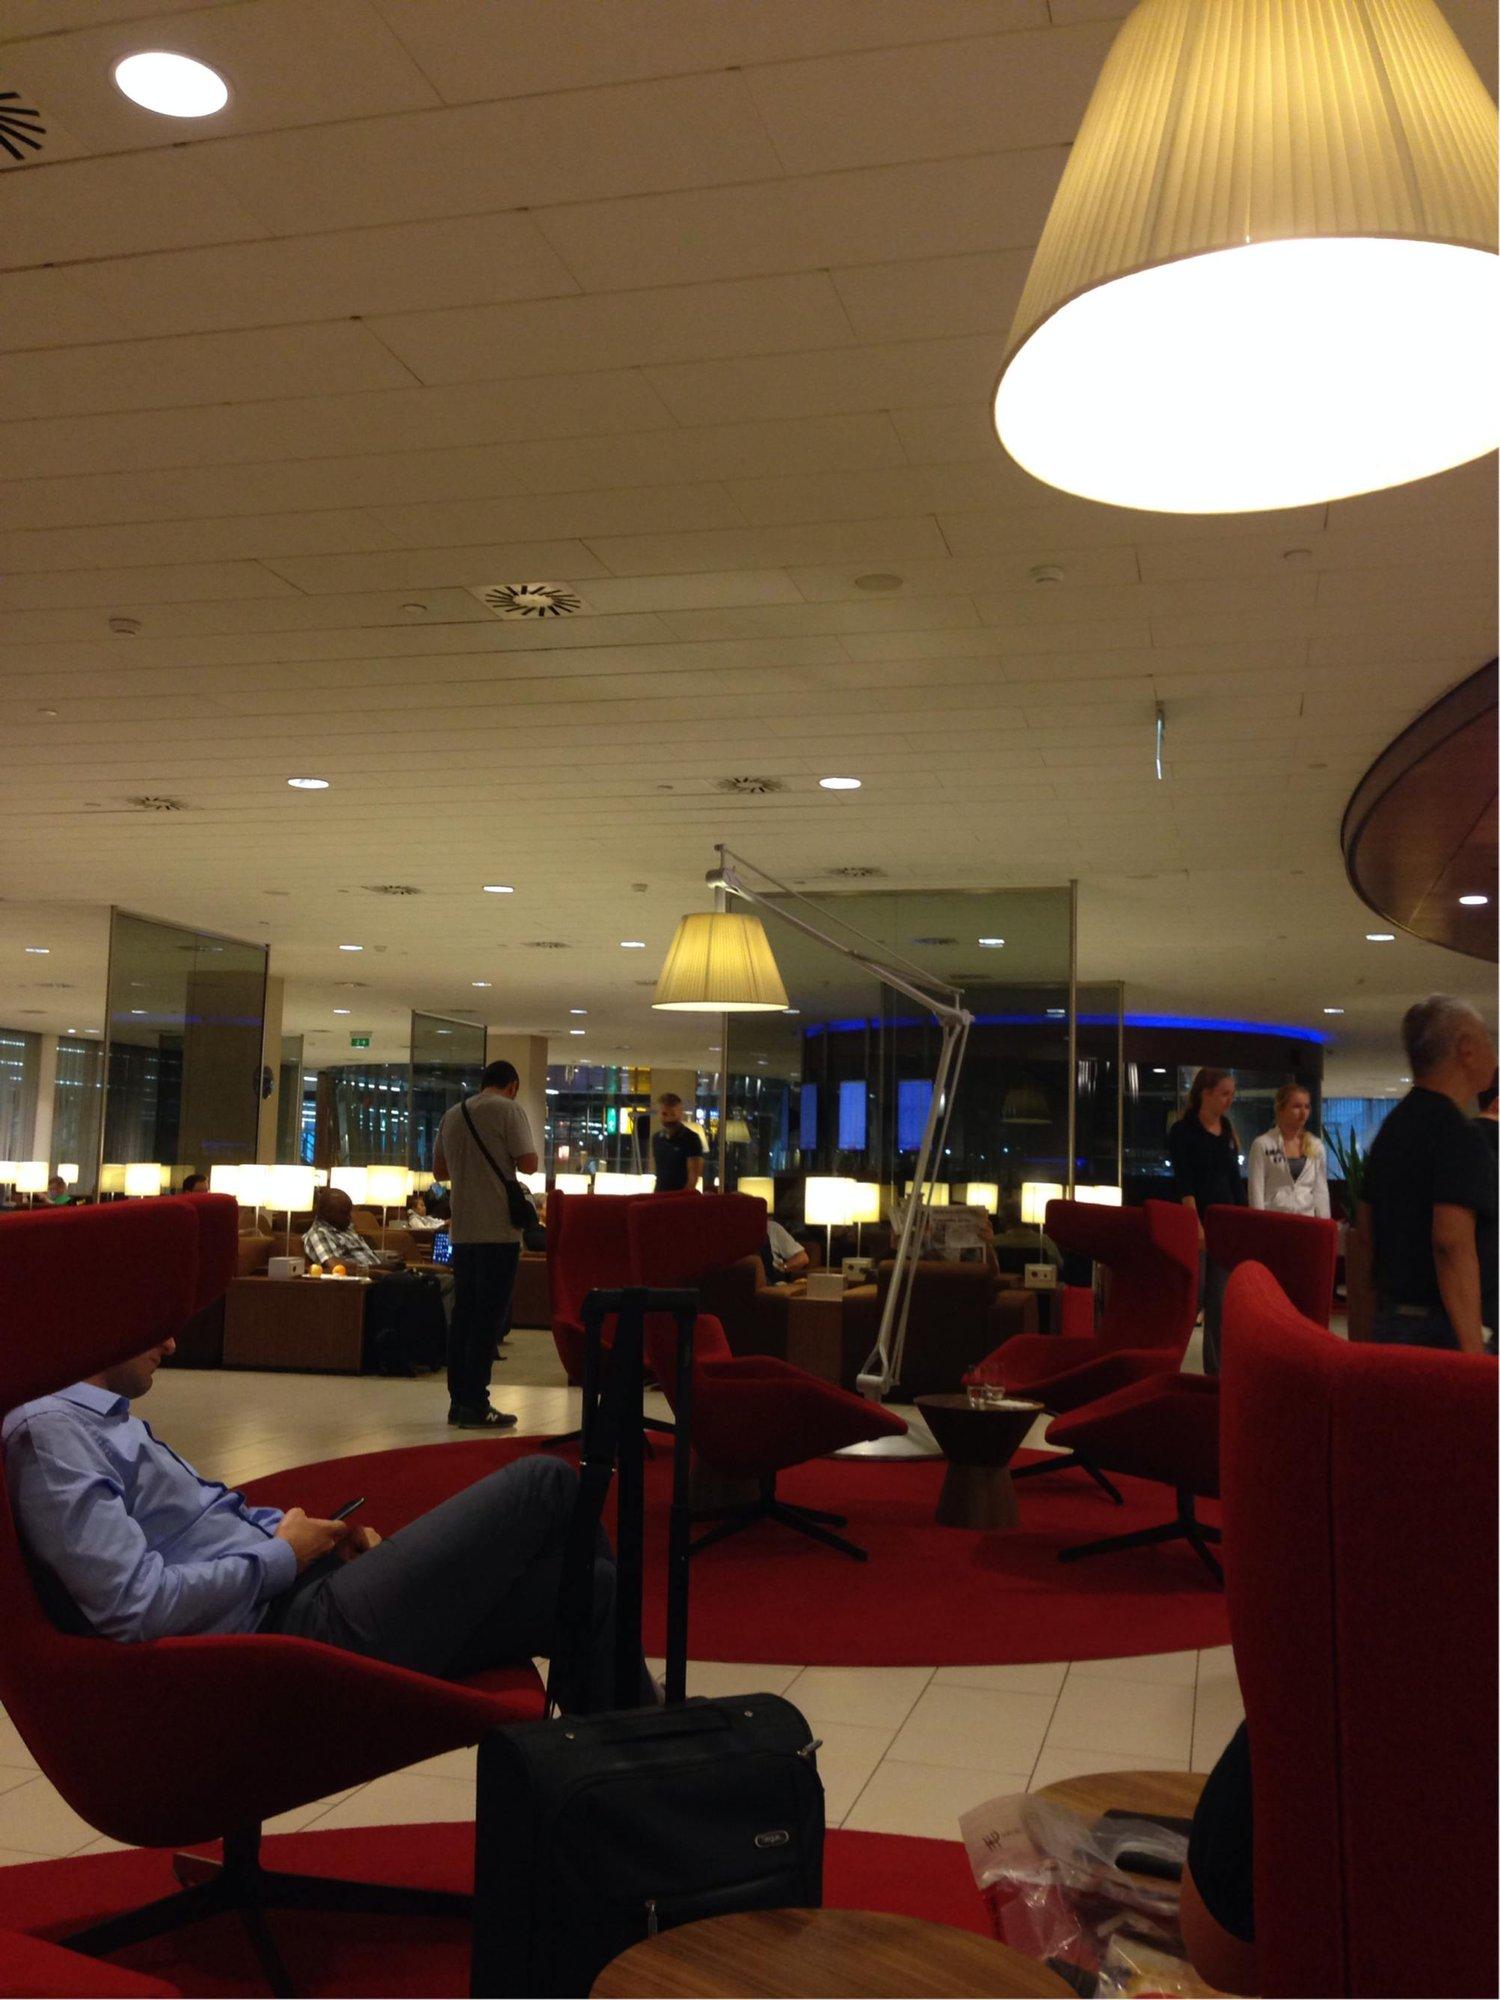 KLM Crown Lounge (25) image 1 of 15